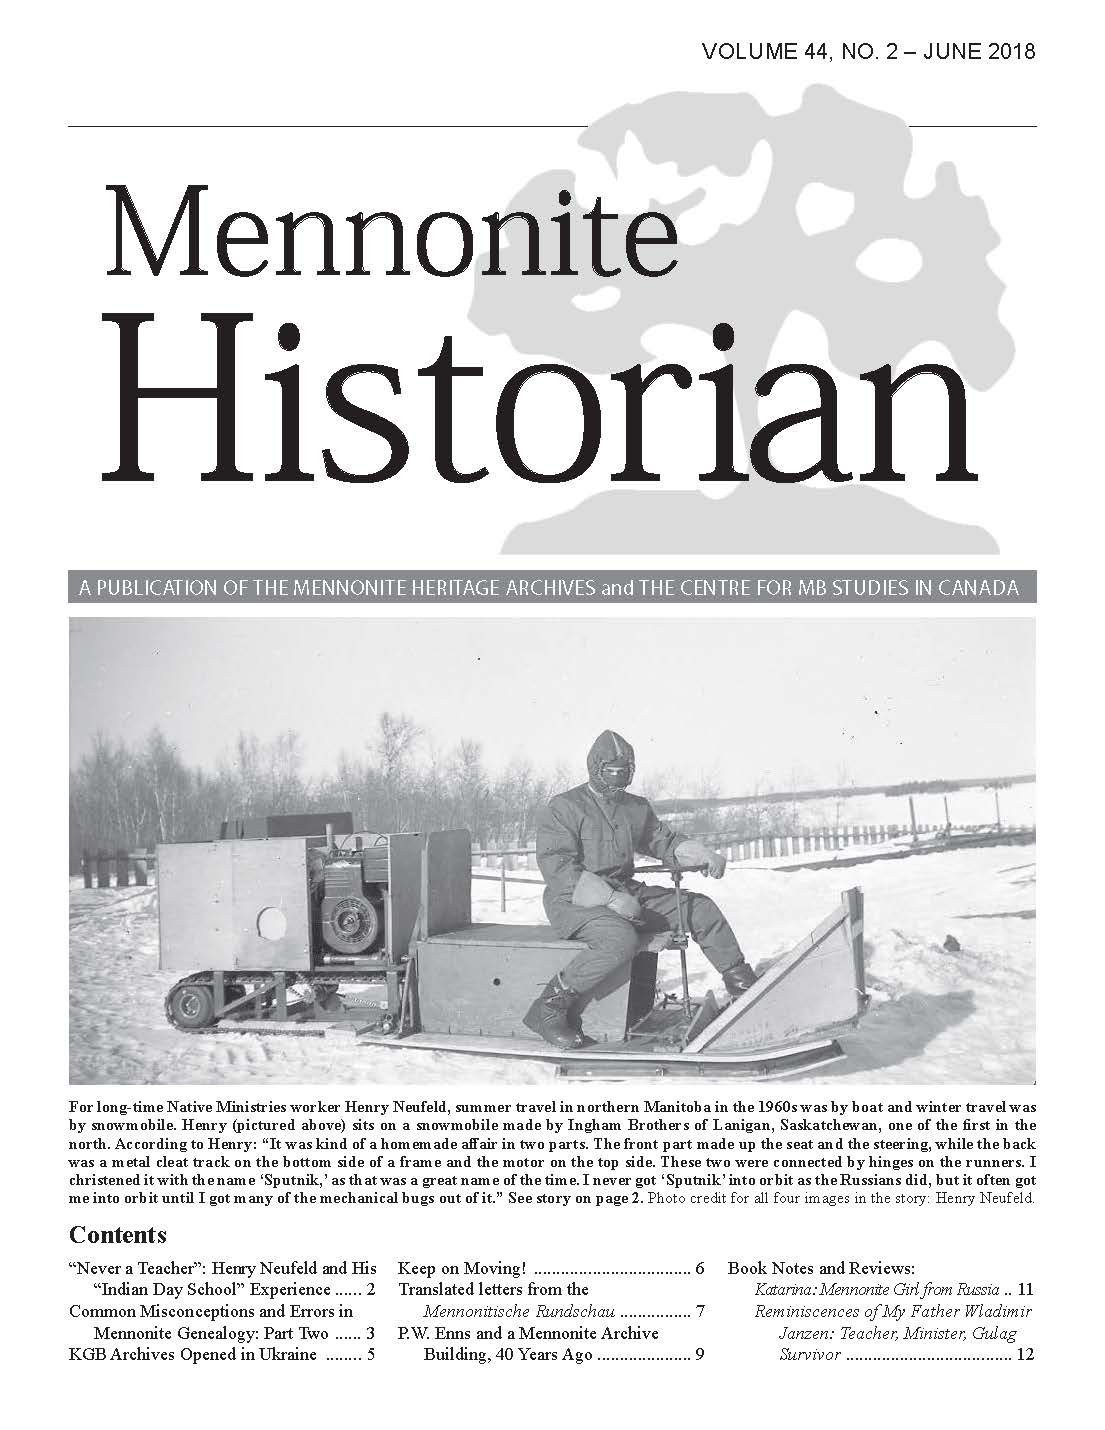 Mennonite Historian (June 2018)